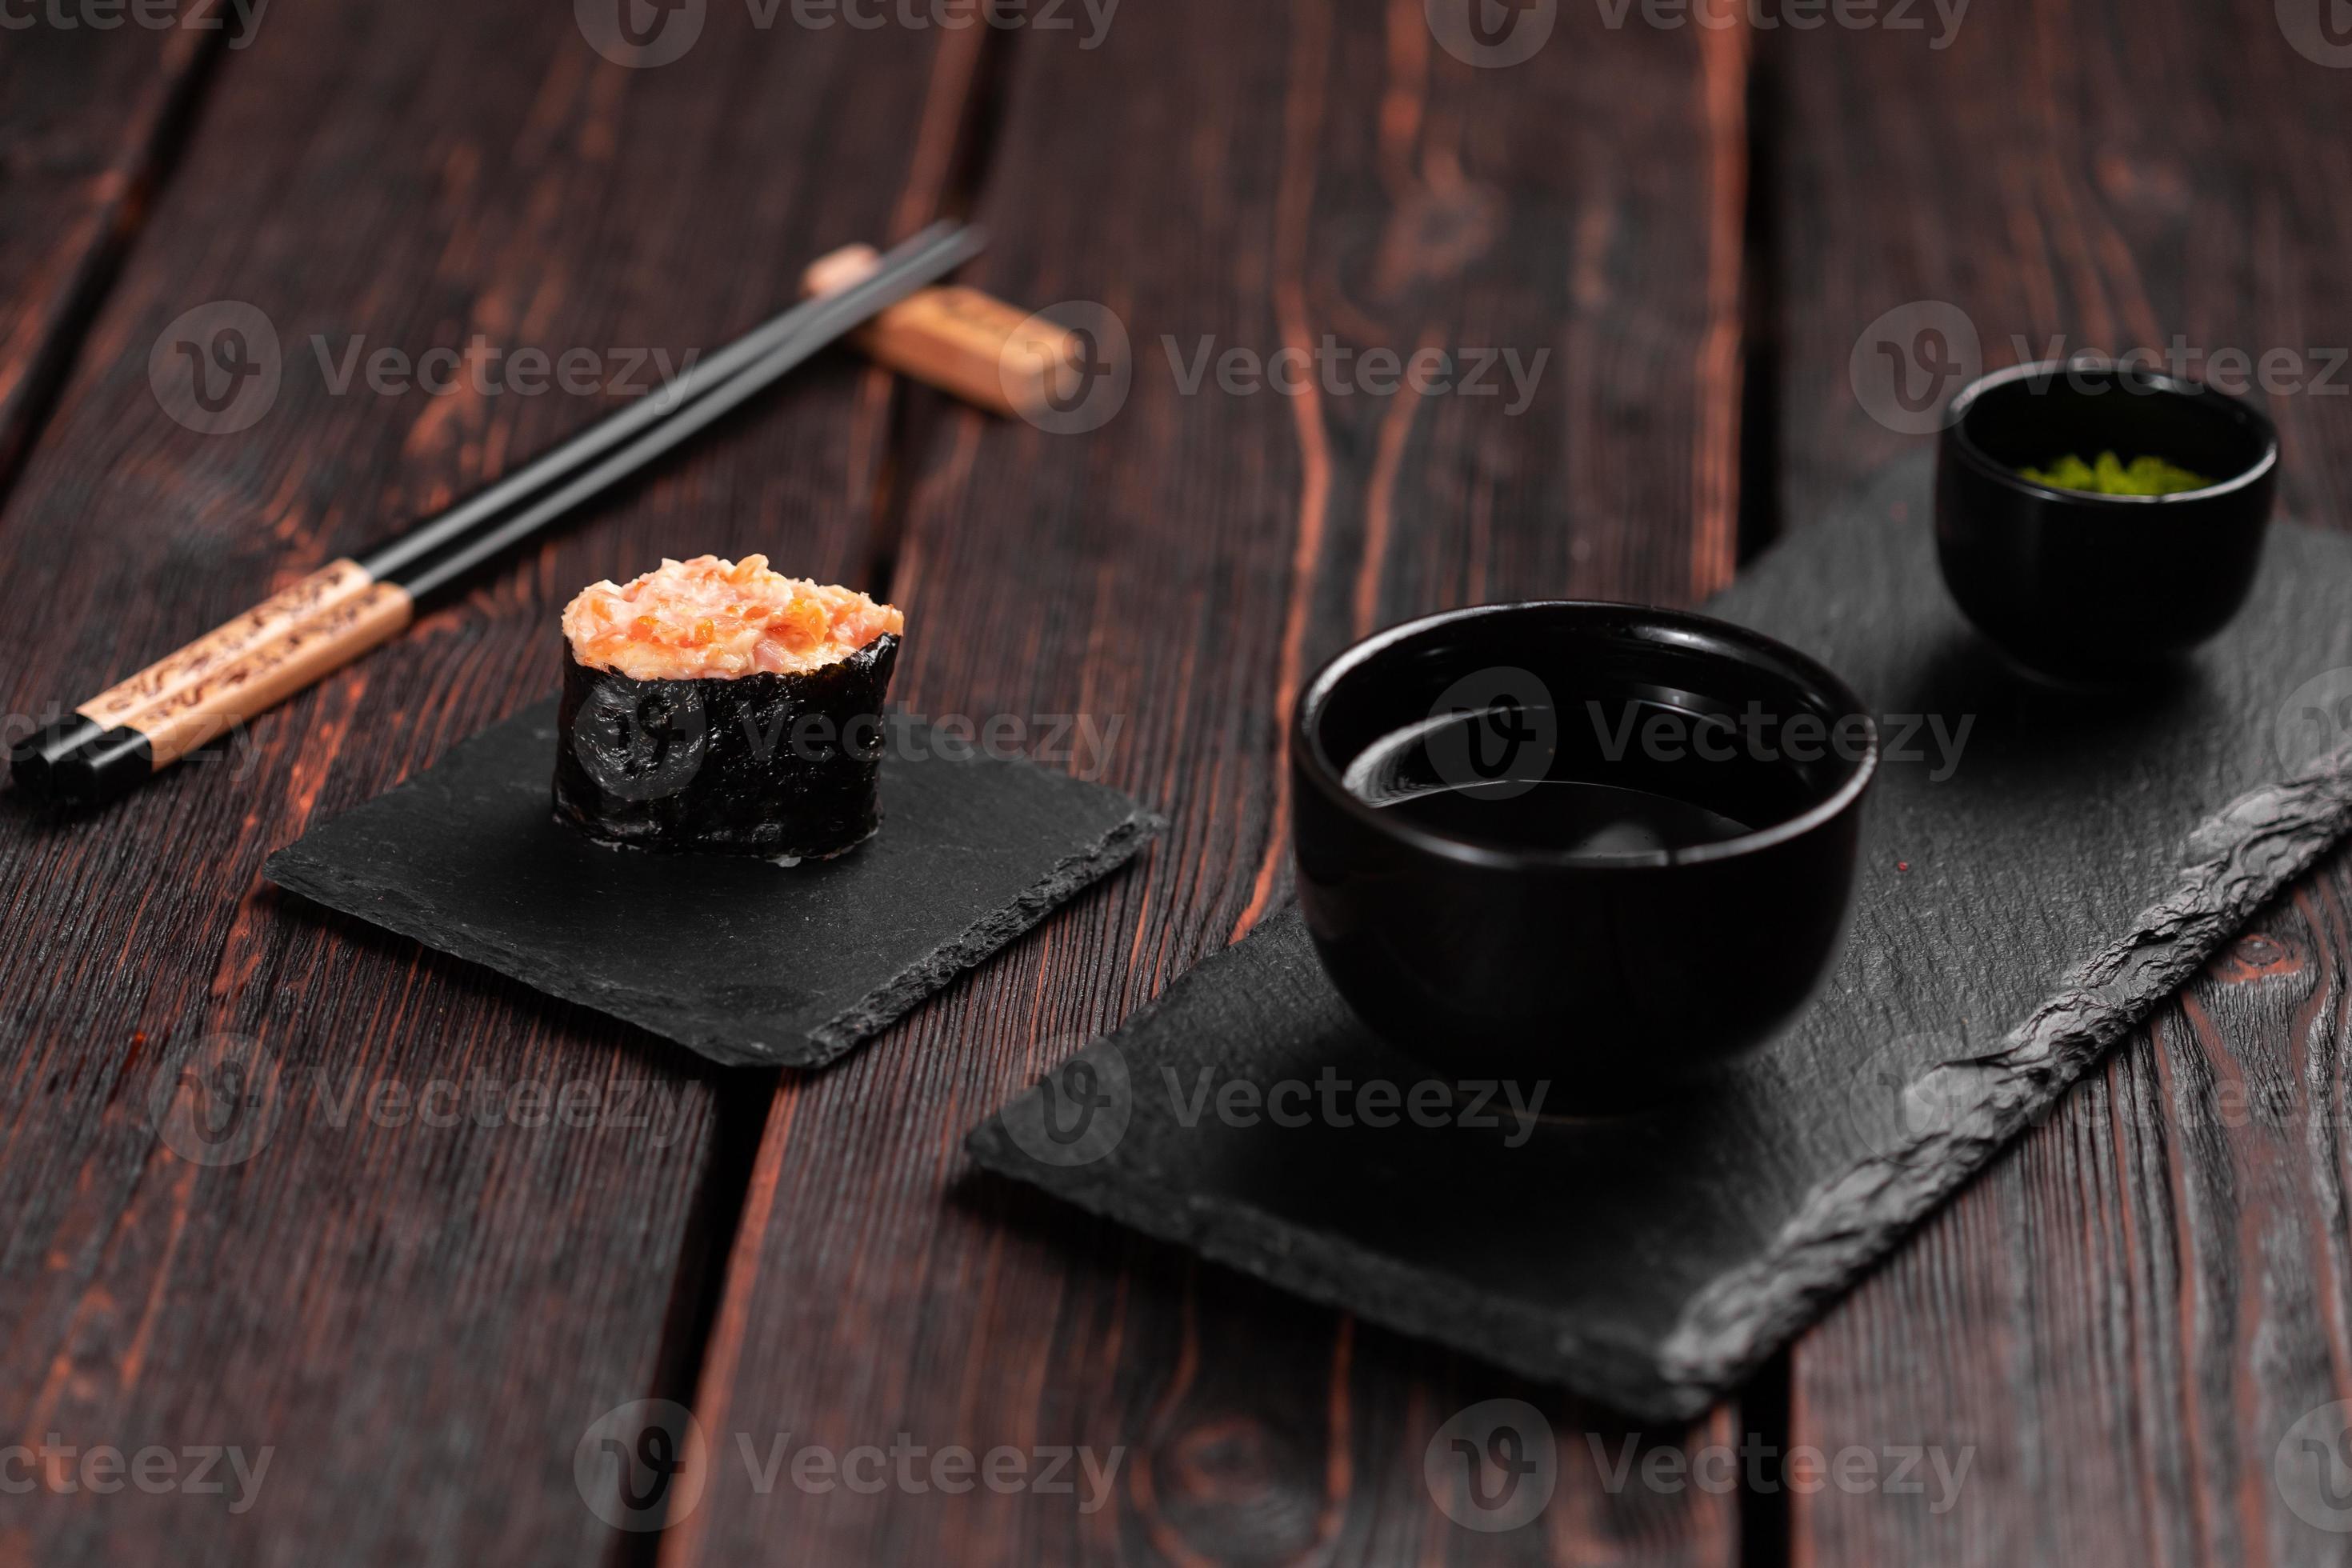 https://static.vecteezy.com/system/resources/previews/017/774/103/large_2x/gunkan-maki-sushi-of-fish-salmon-scallop-perch-eel-shrimp-and-caviar-on-wooden-table-background-sushi-menu-japanese-food-sushi-set-gunkans-photo.jpg